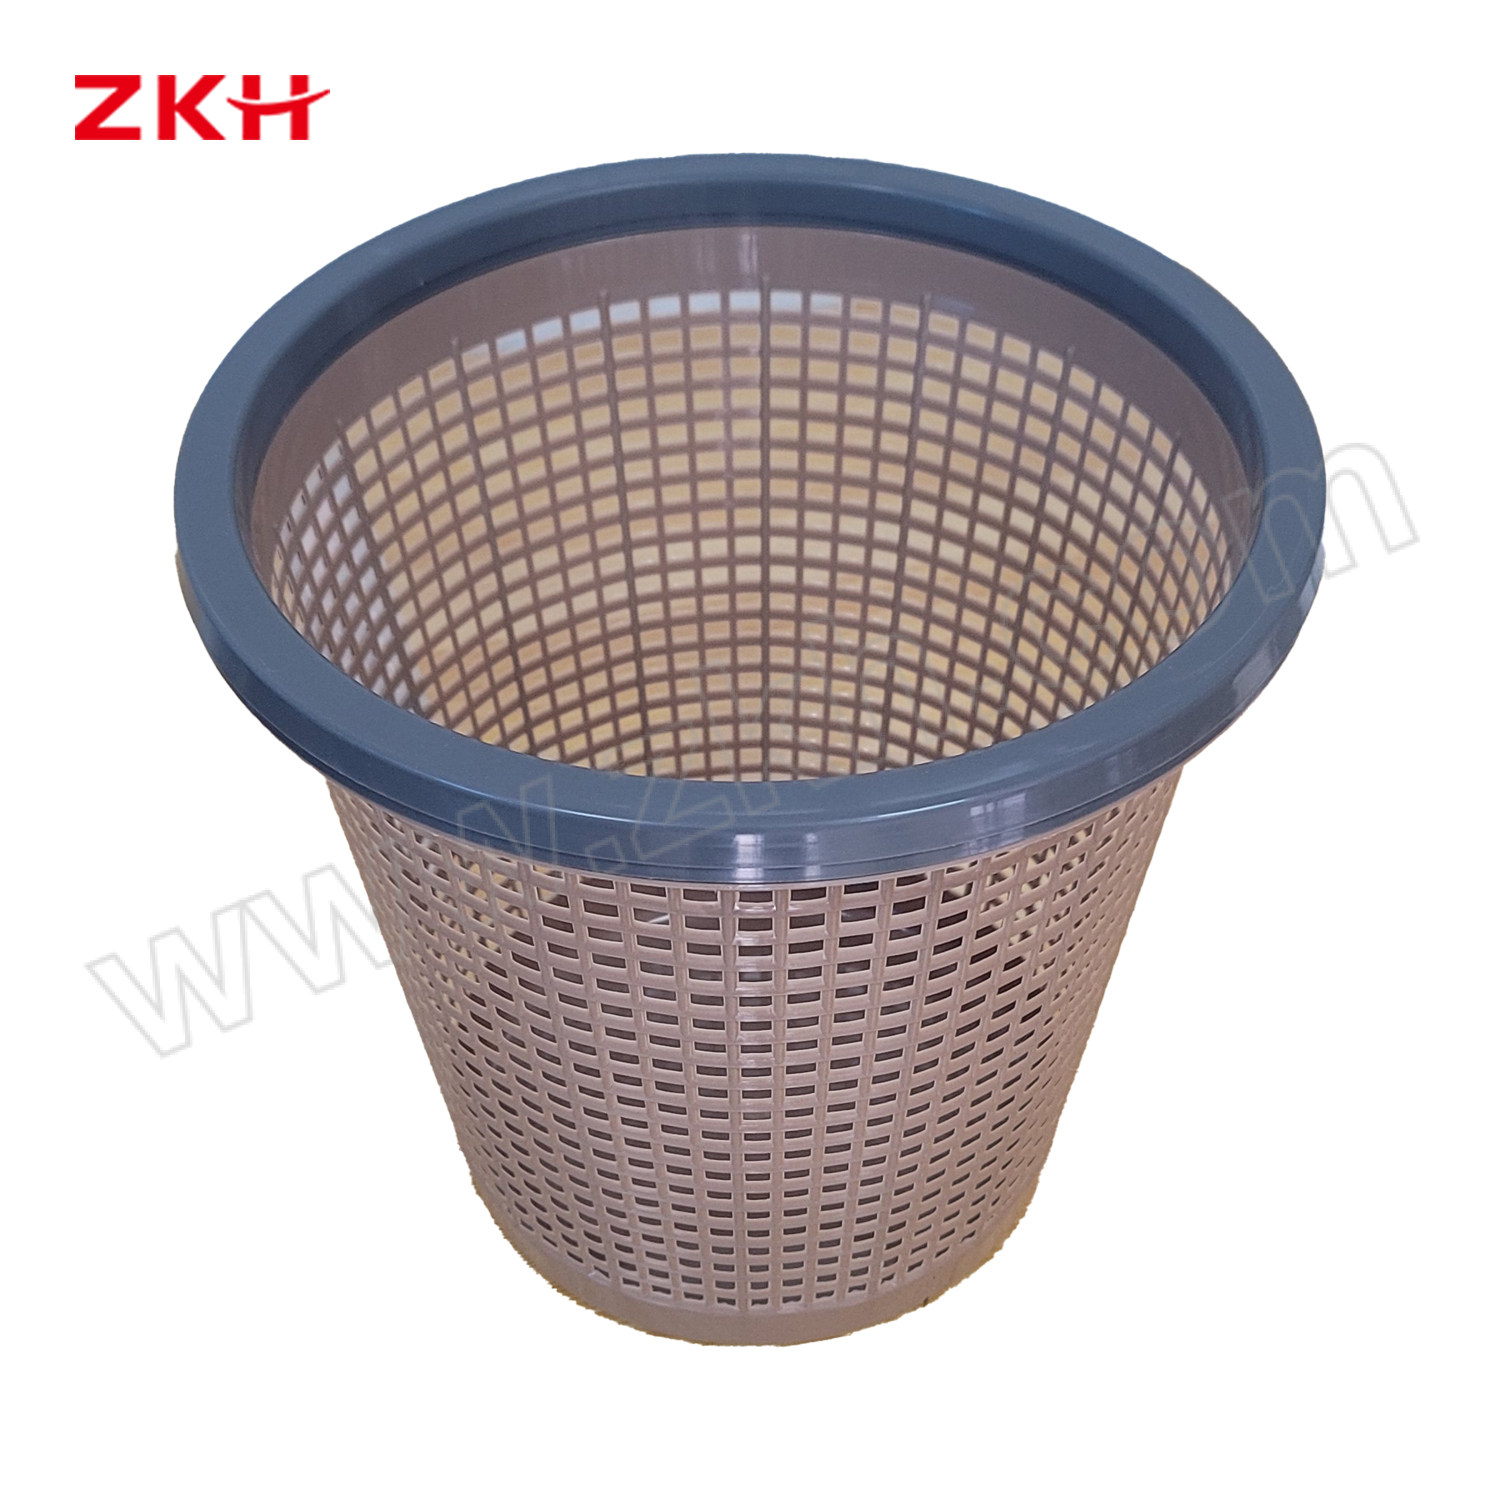 ZKH/震坤行 压圈网格镂空垃圾桶 ZKH-LJT-SLLK10  10L 1个